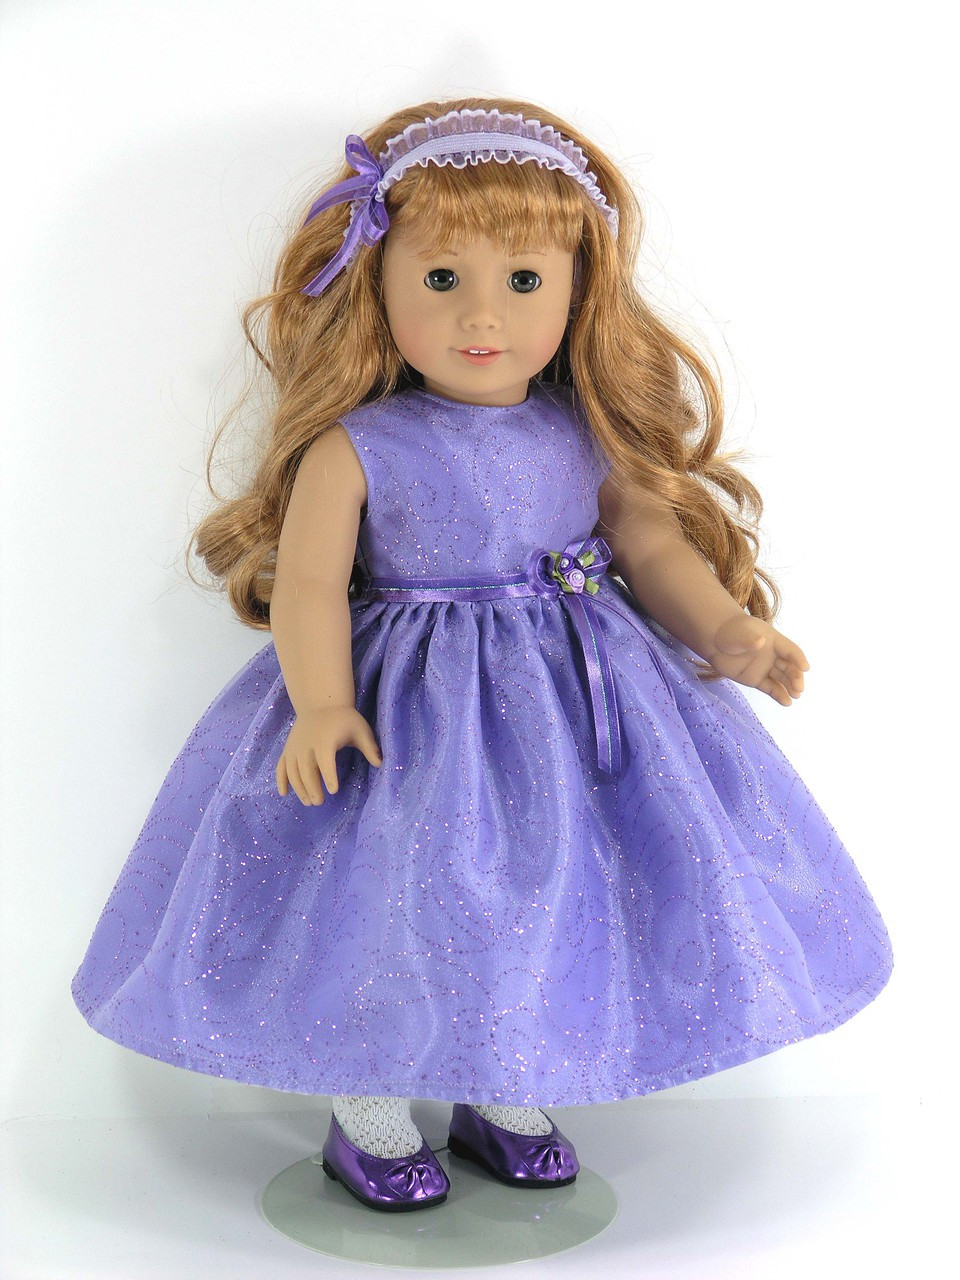 Clothes for American Girl Doll - Dress, Pantaloons, Headband - Lavender ...